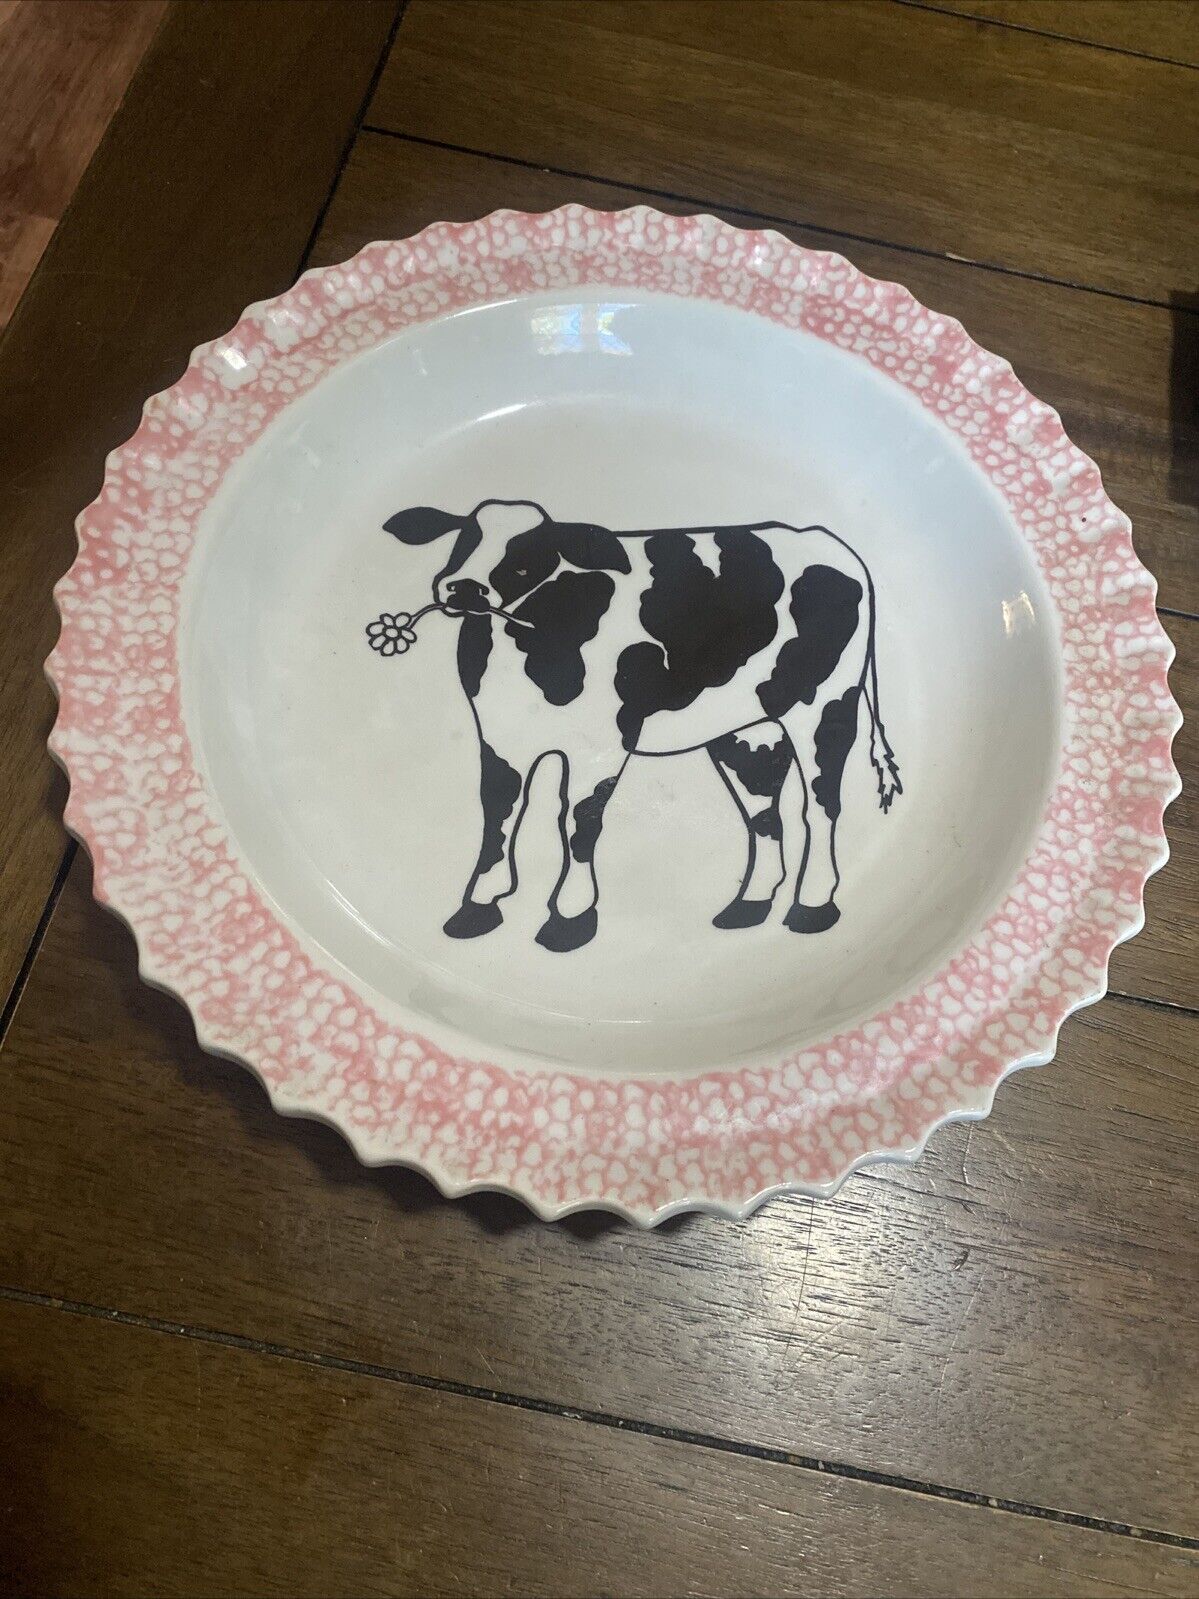 ABC Exclusive Ceramic Country Classic Heart Pie Plates Pink Spongeware w/Cow